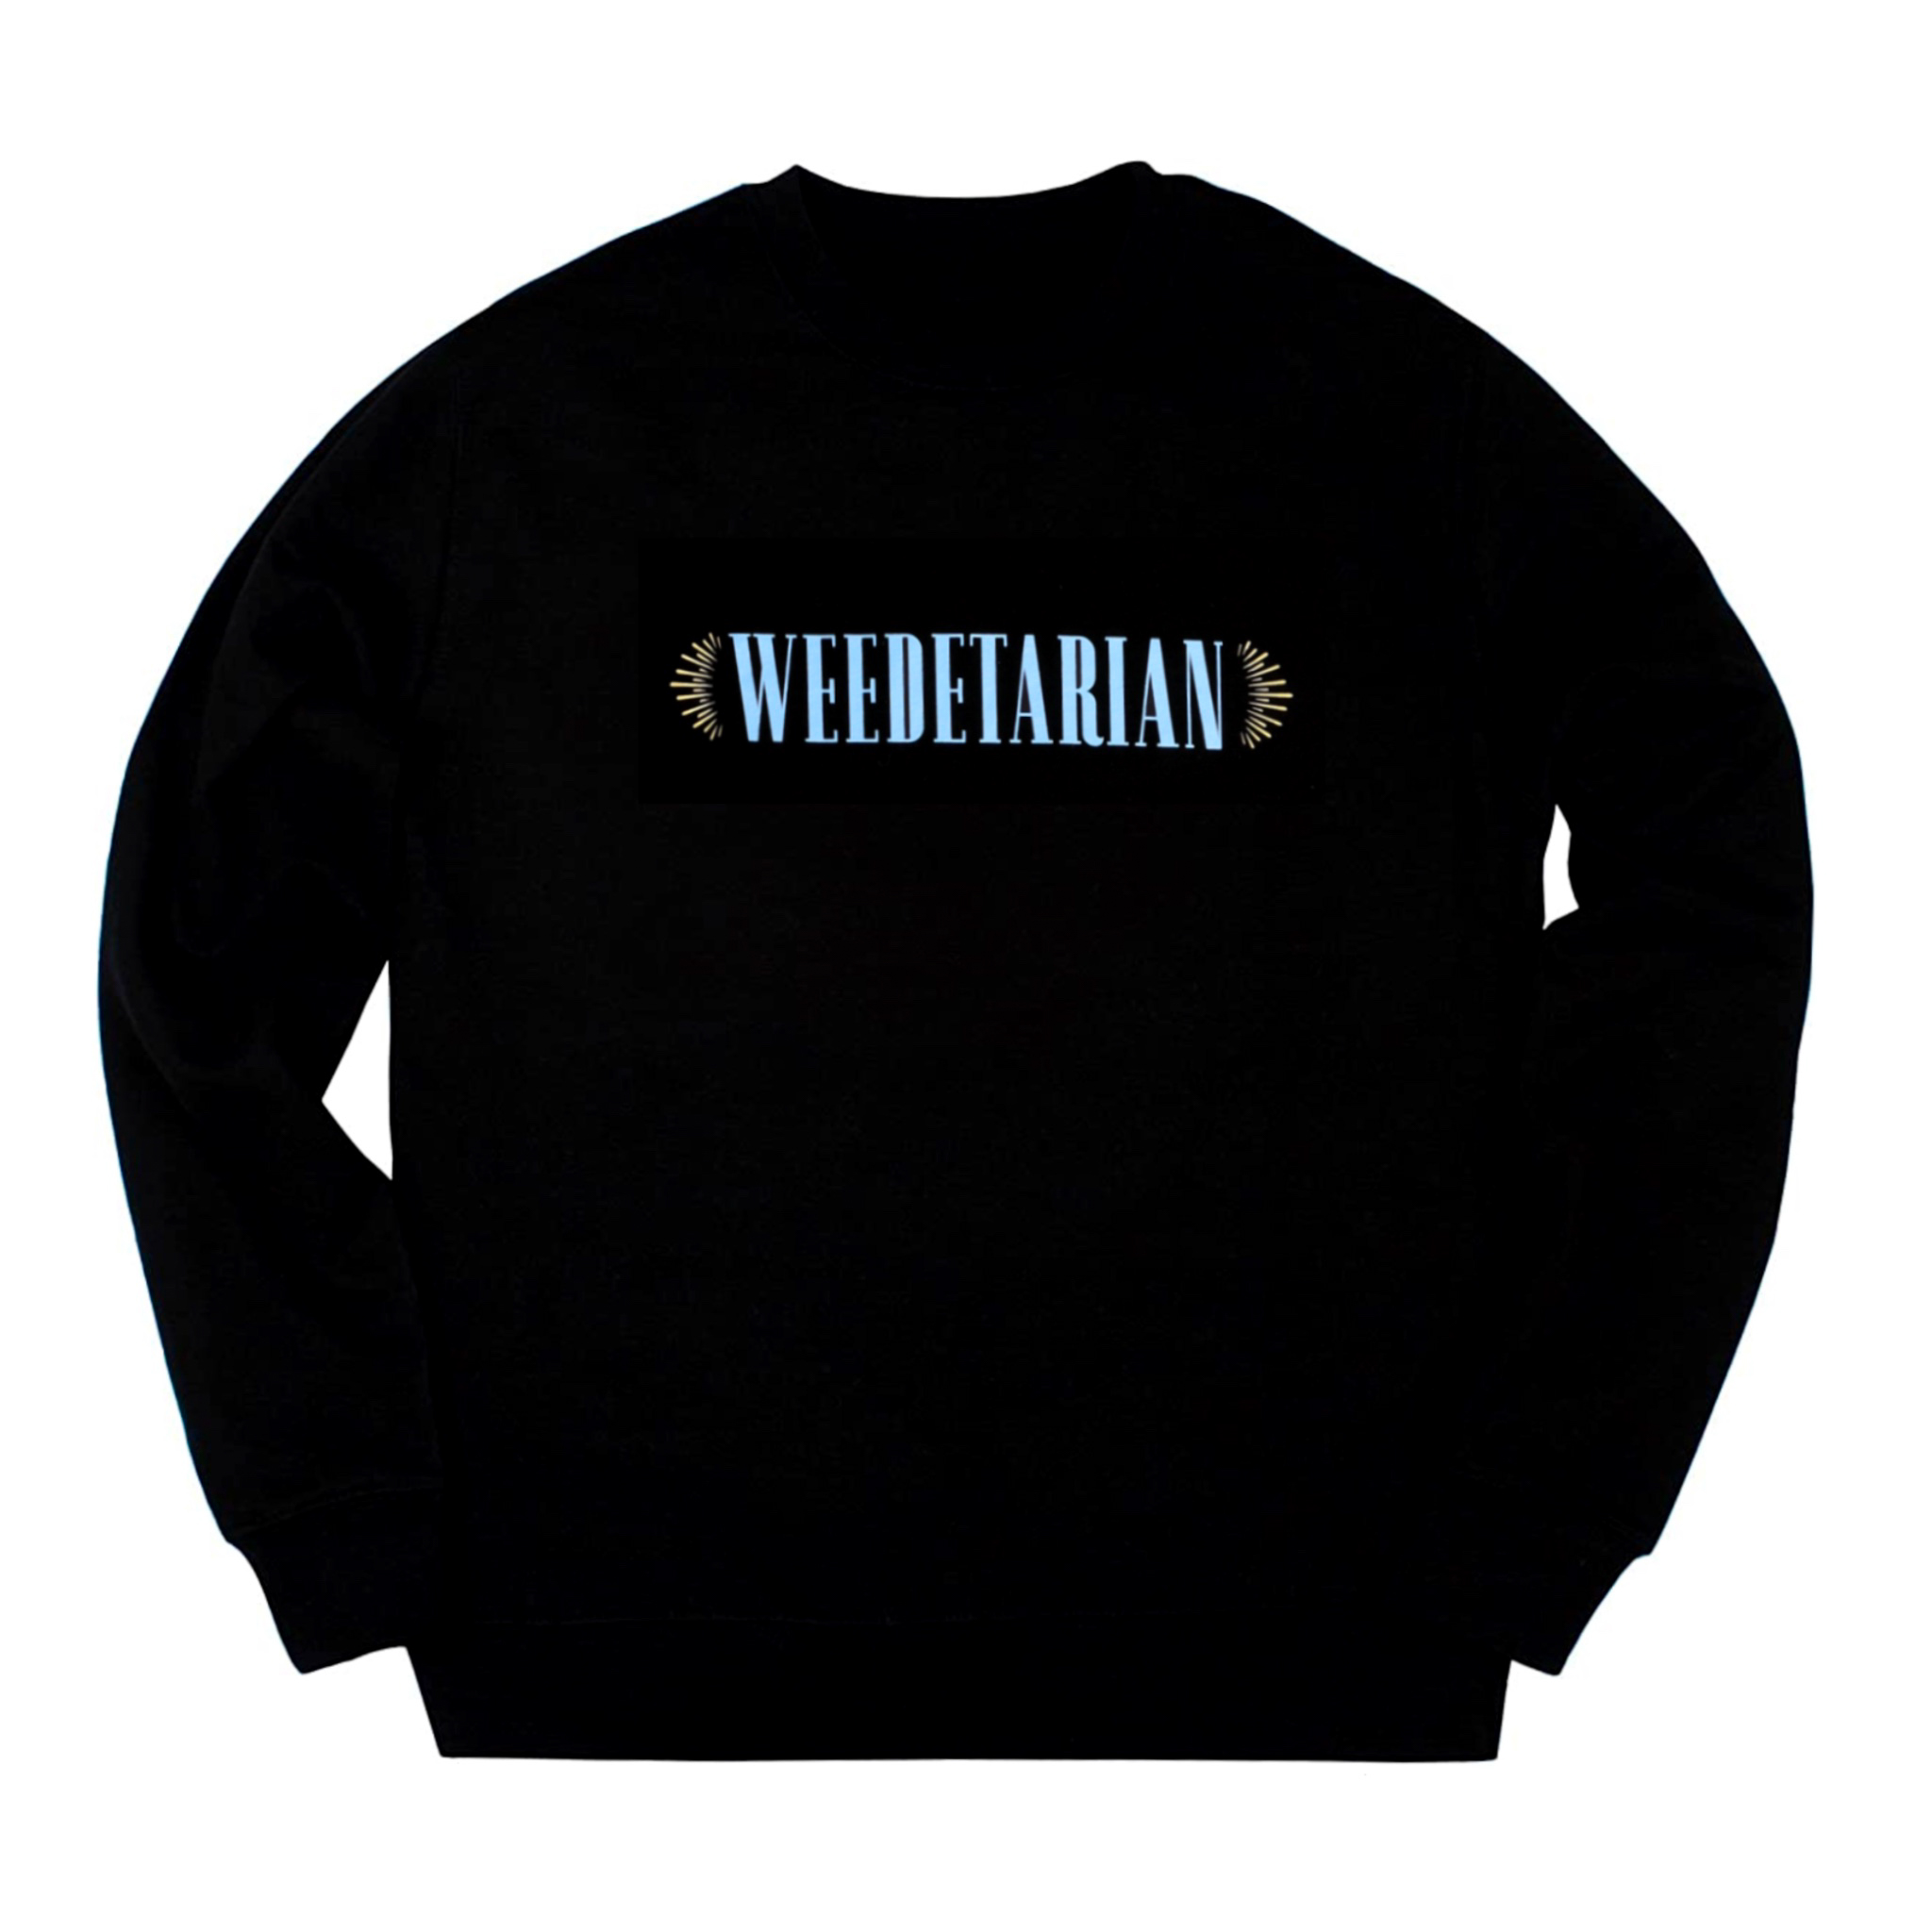 Black Sweatshirt with the print "WEEDETARIAN"